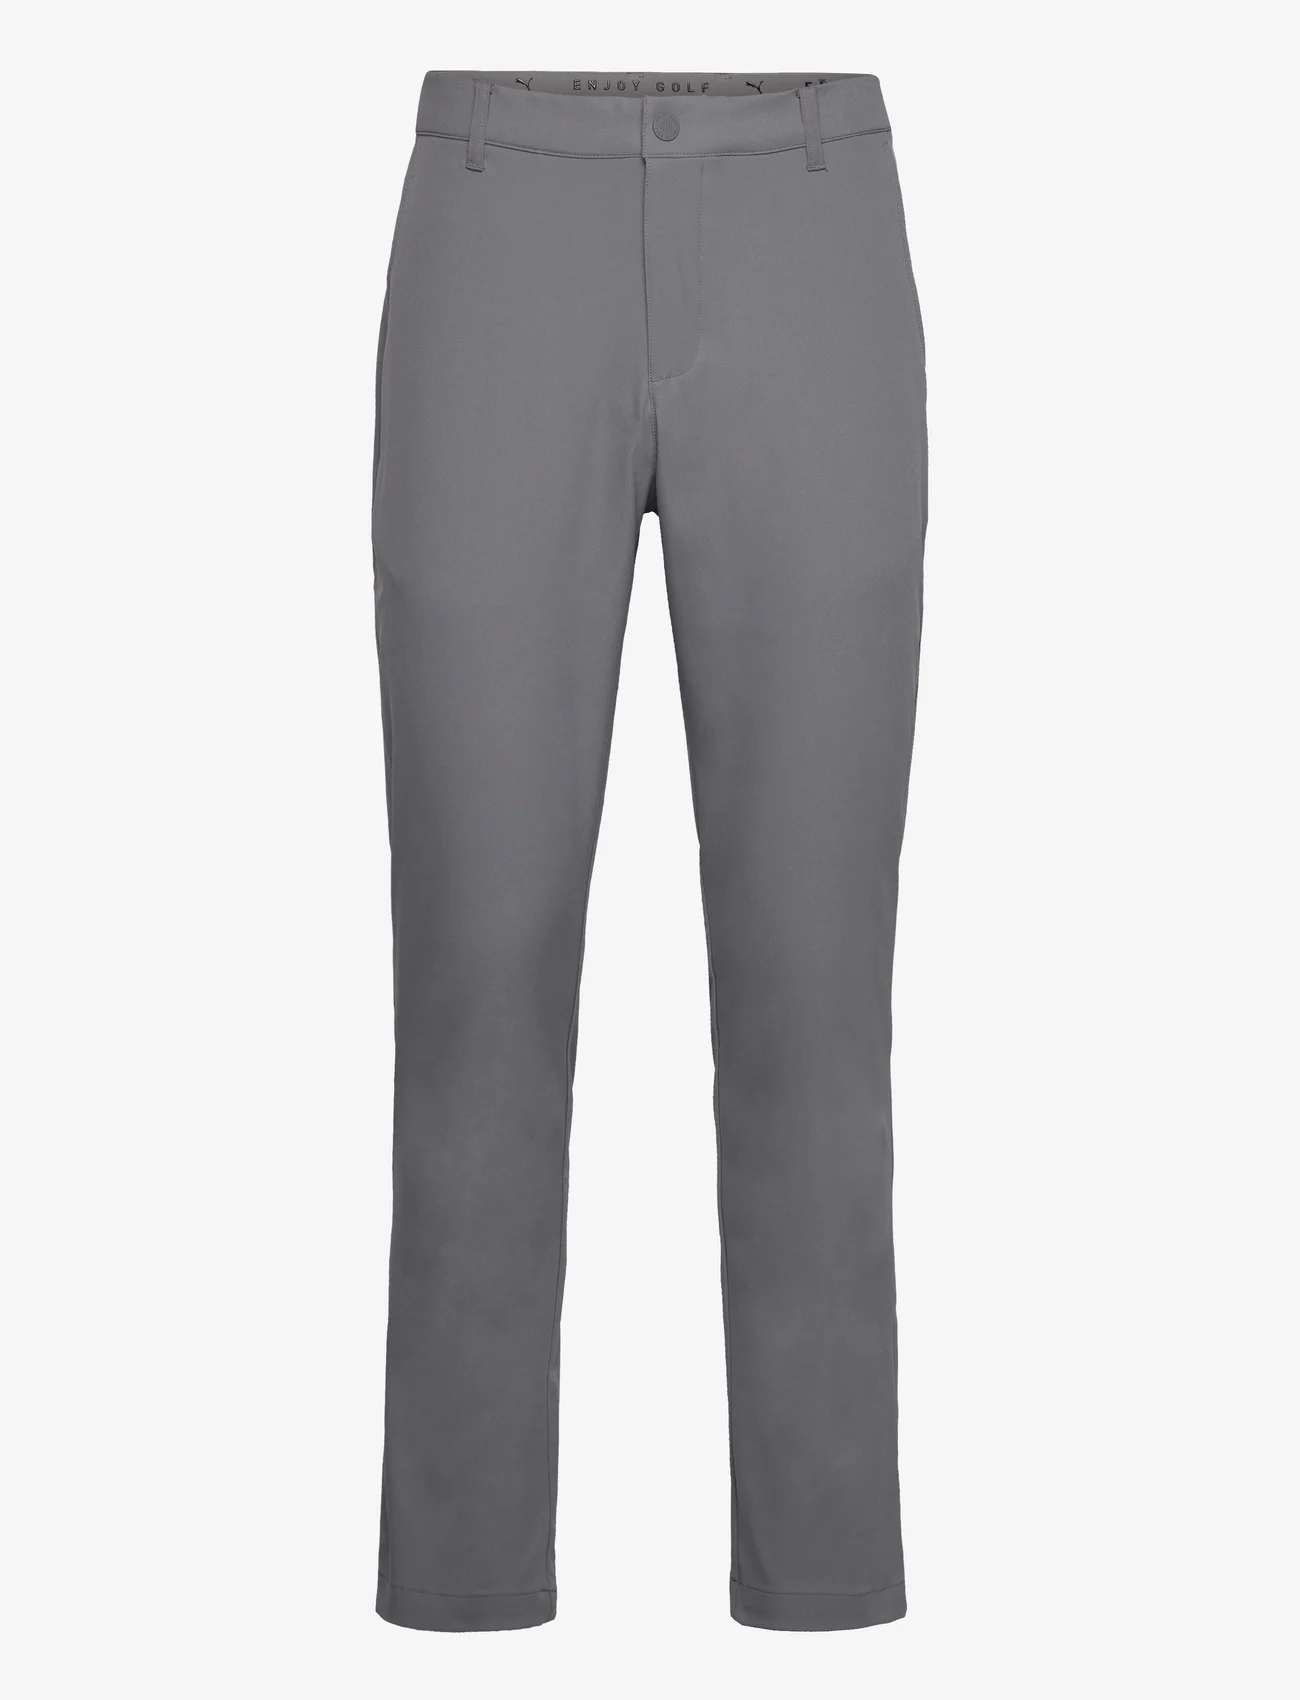 PUMA Golf - Dealer Tailored Pant - golf pants - slate sky - 0